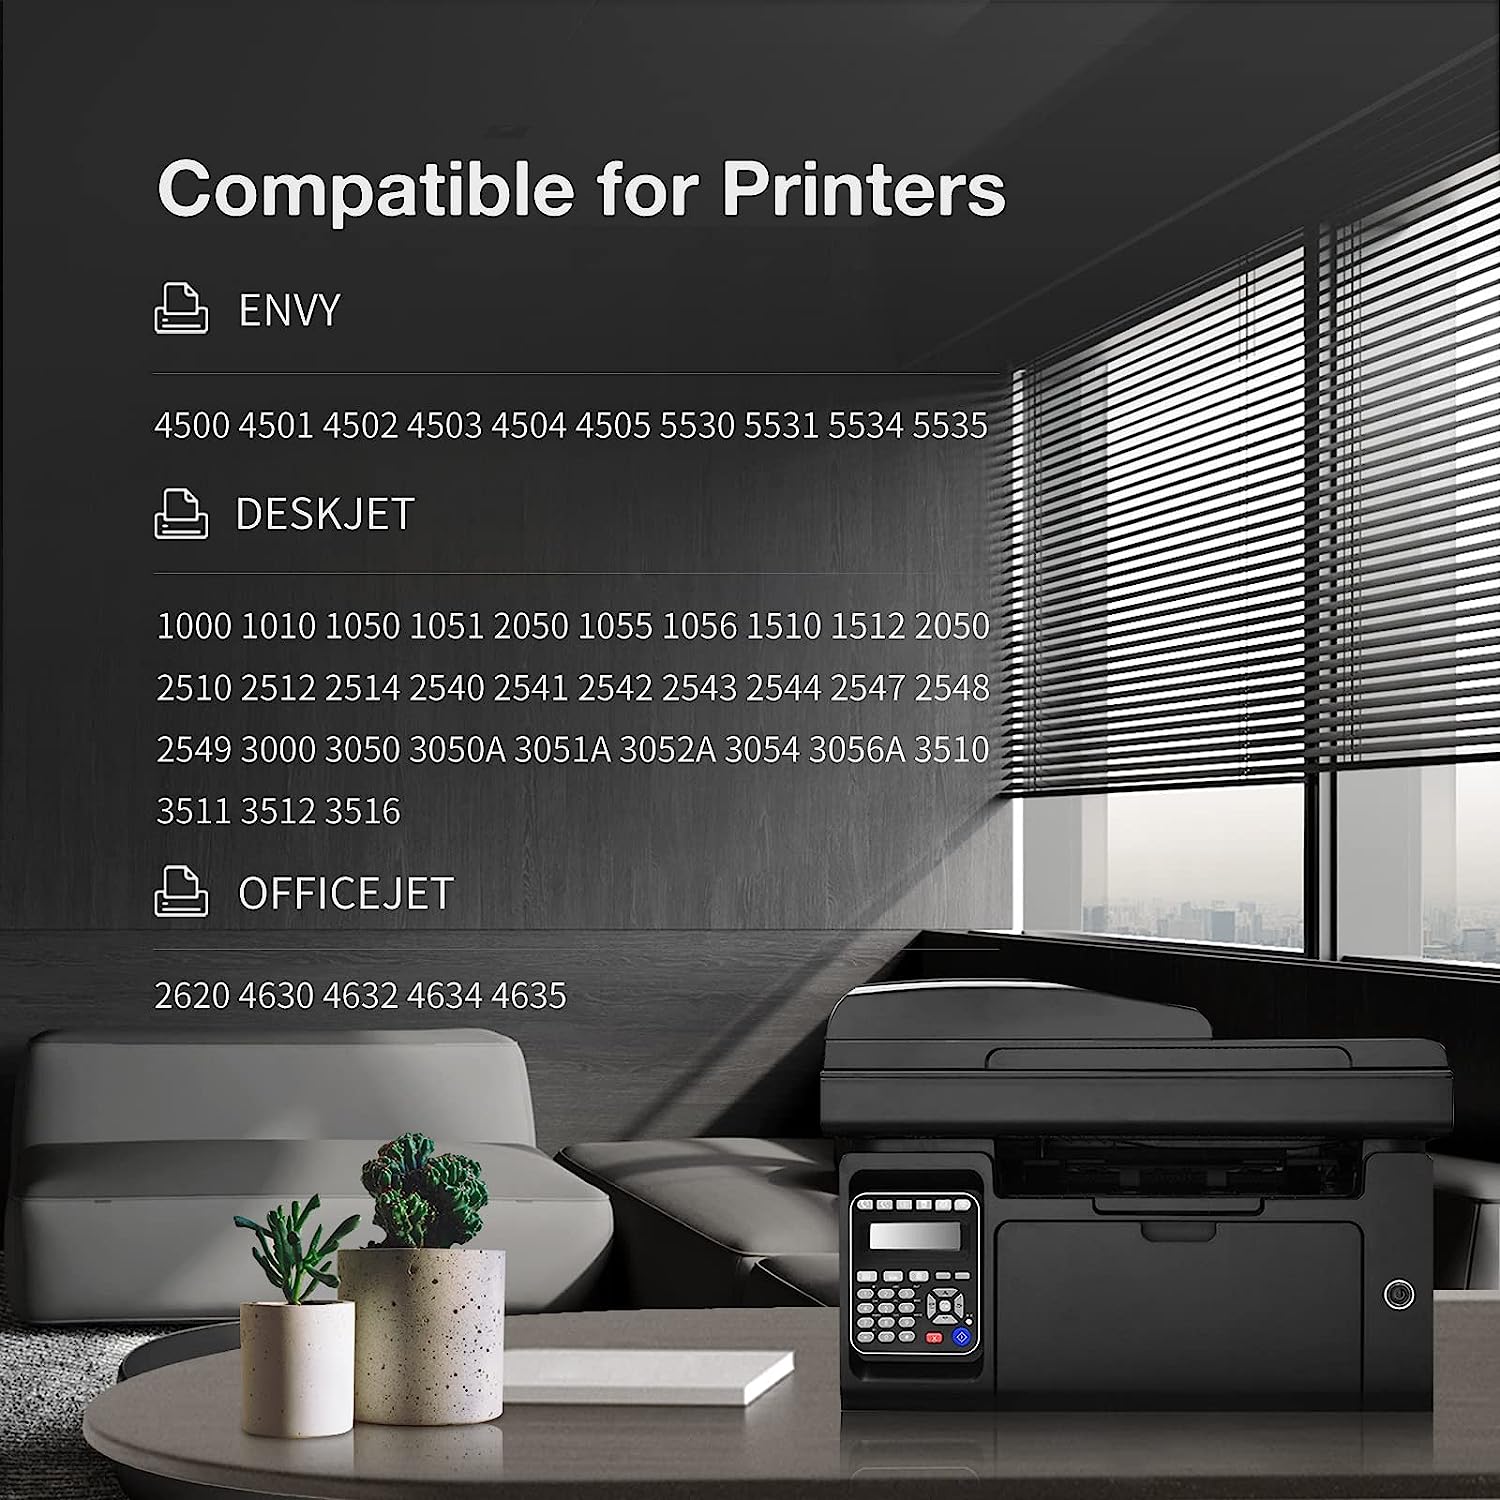 Buy HP DeskJet 2547 Printer Ink Cartridges